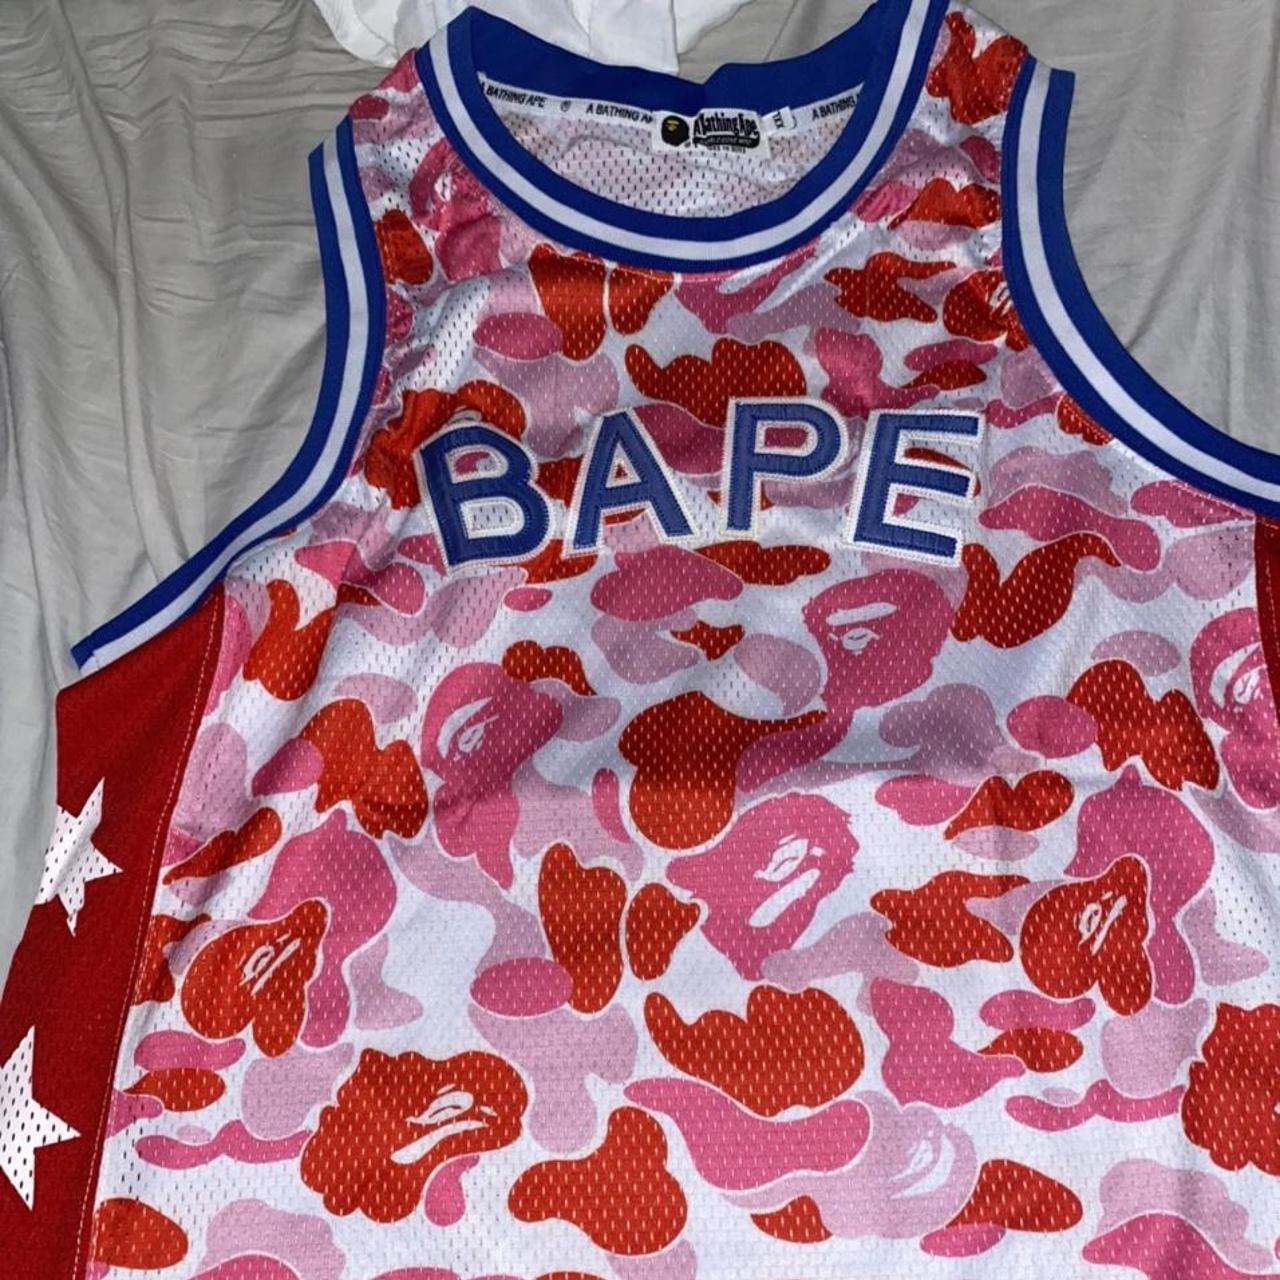 Bape jersey & shorts basketball , #bape #basketball